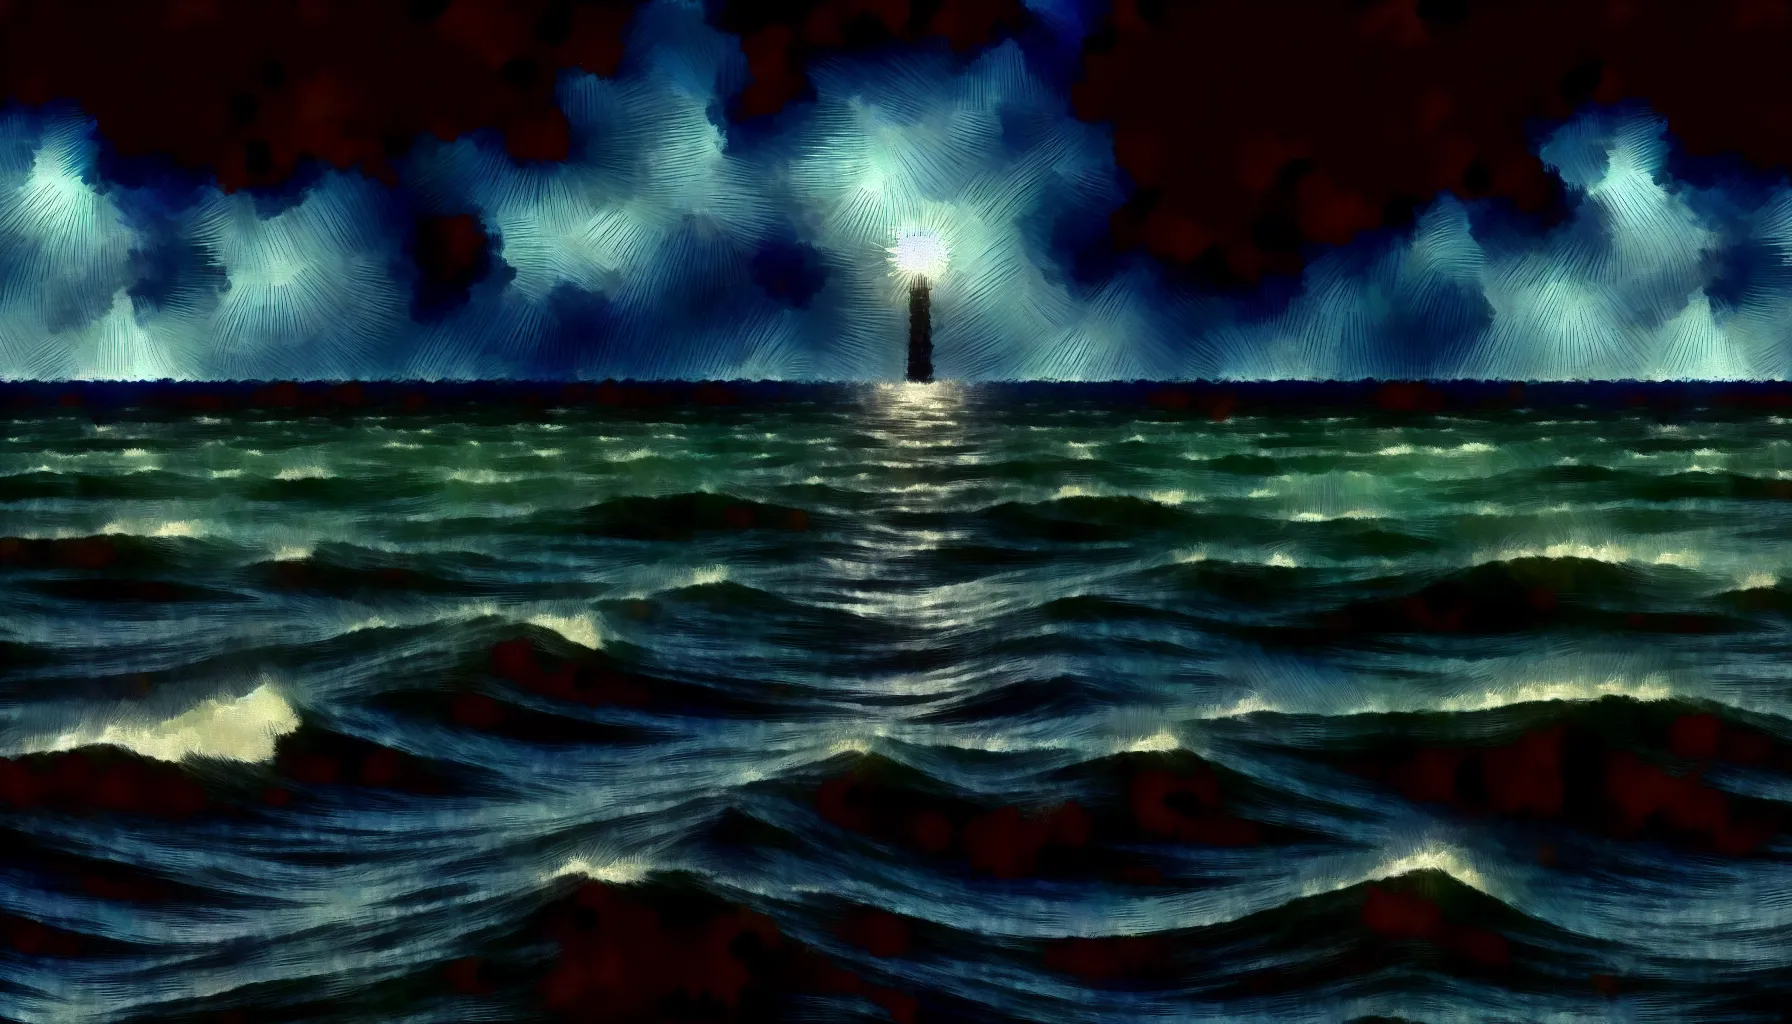 Lighthouse guiding through the stormy sea